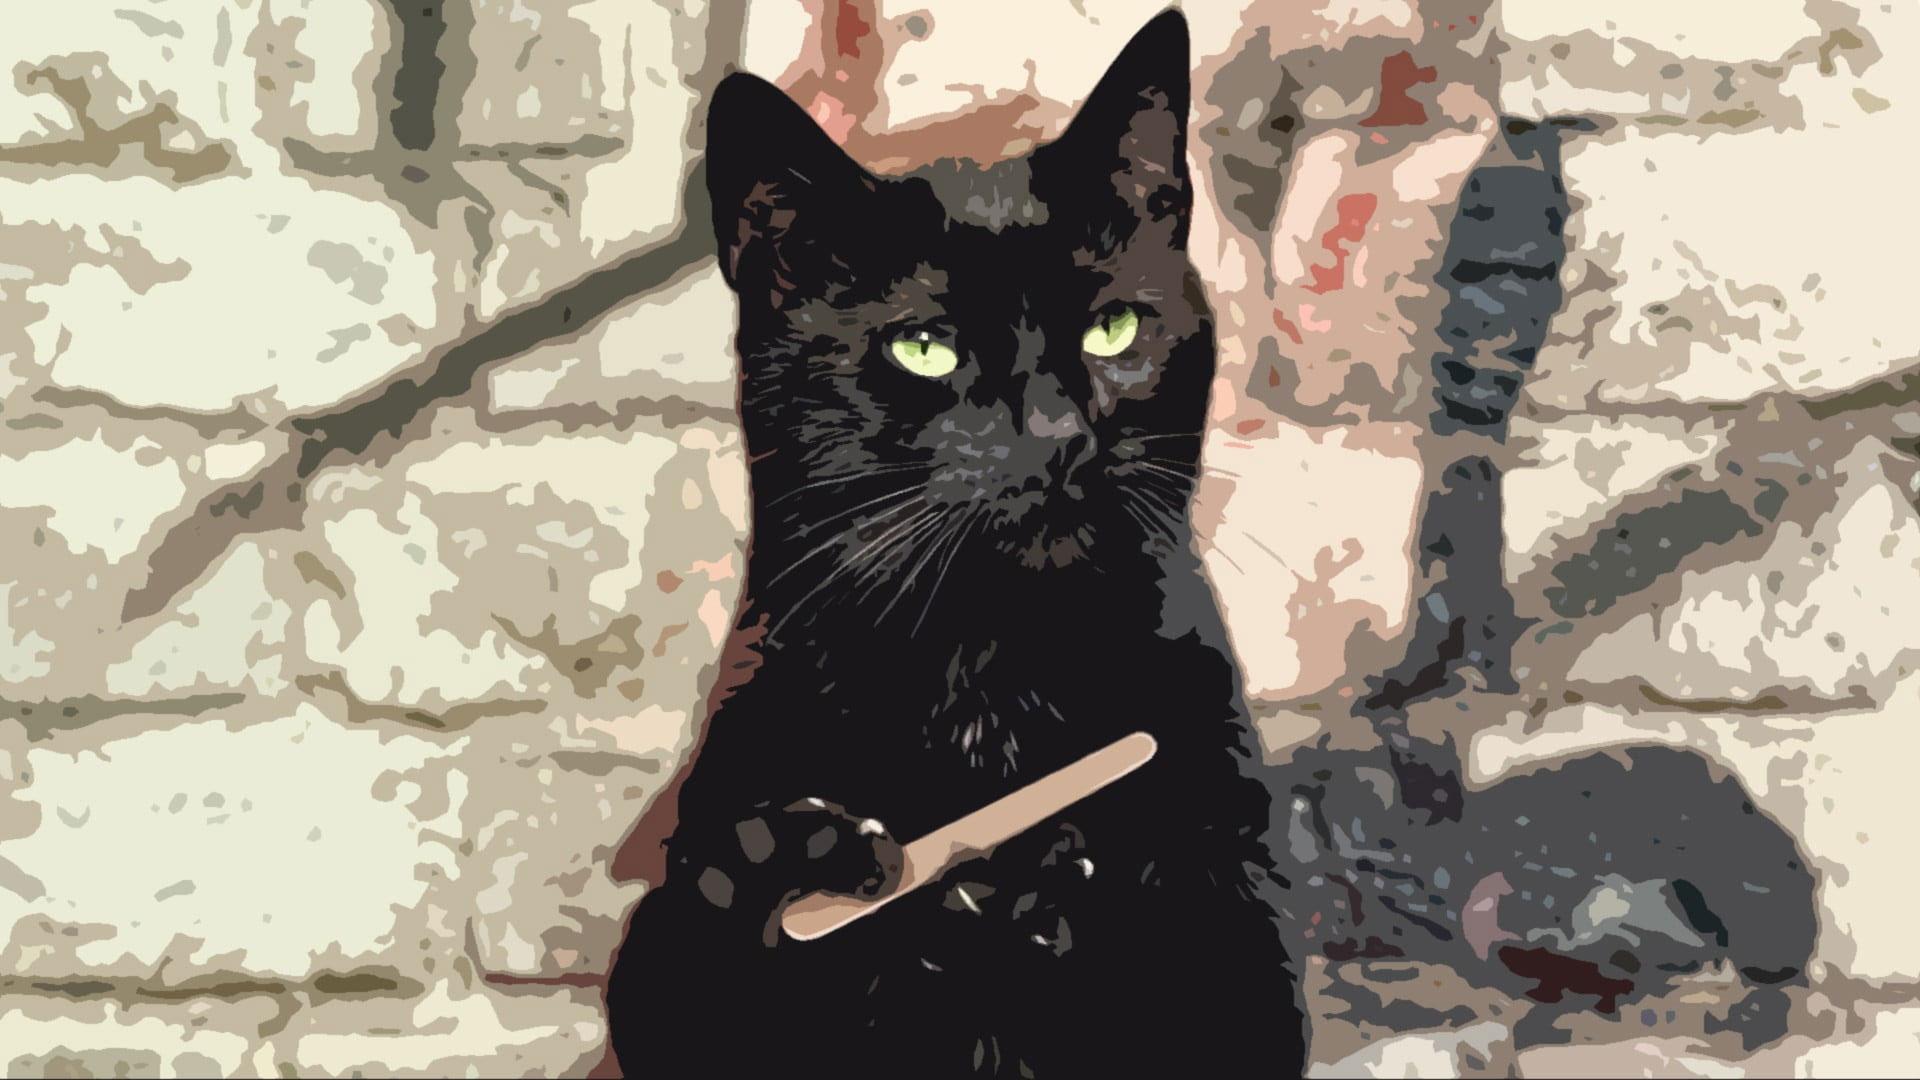 Black cat painting wallpaper, black cats, animals, humor, domestic animals